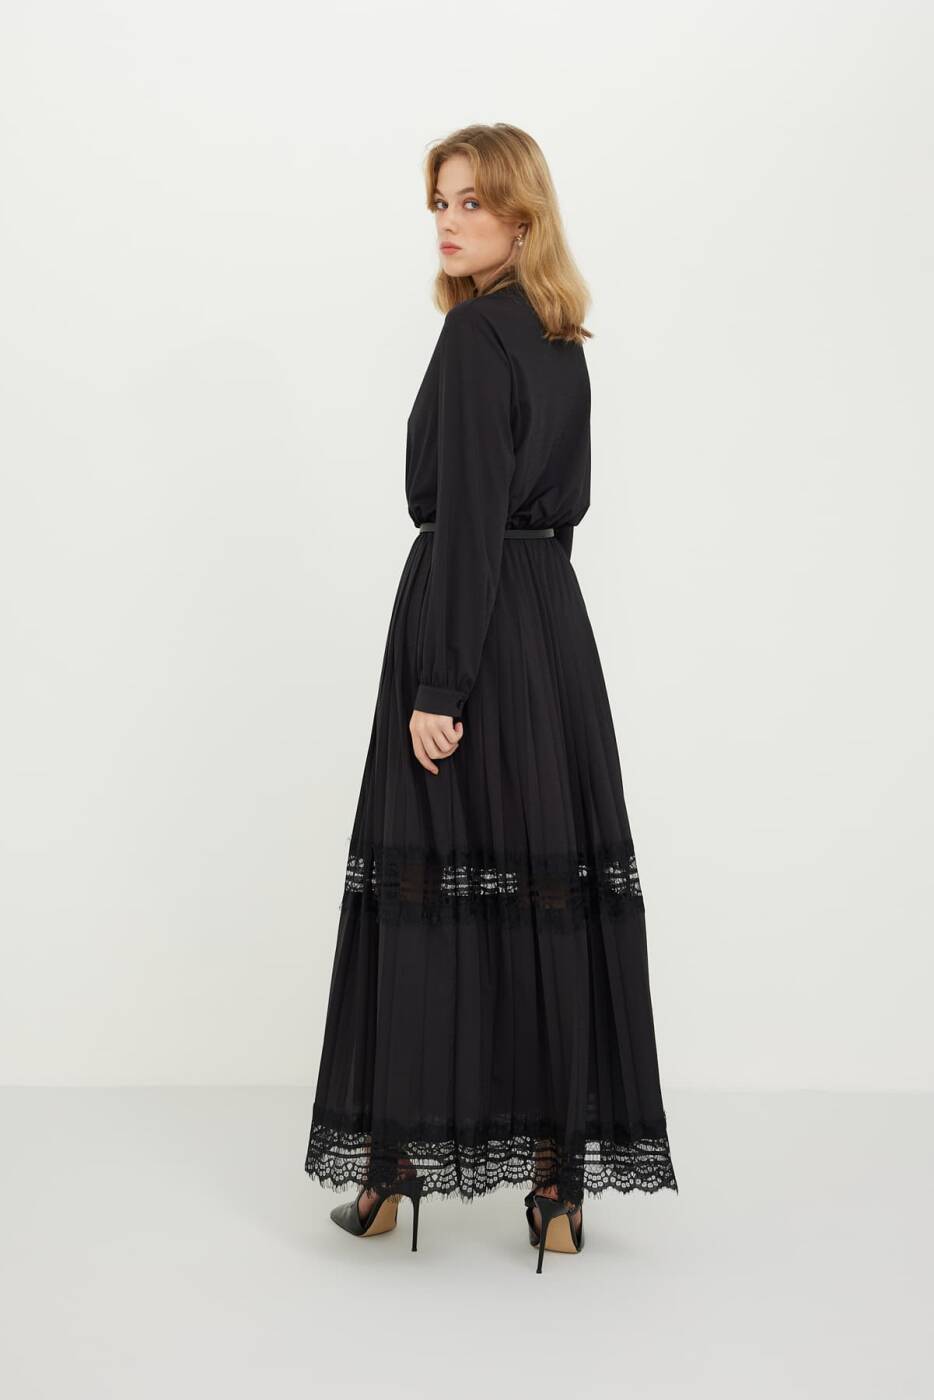 Dantel Detaylı Pilise Örme Elbise Siyah - 2